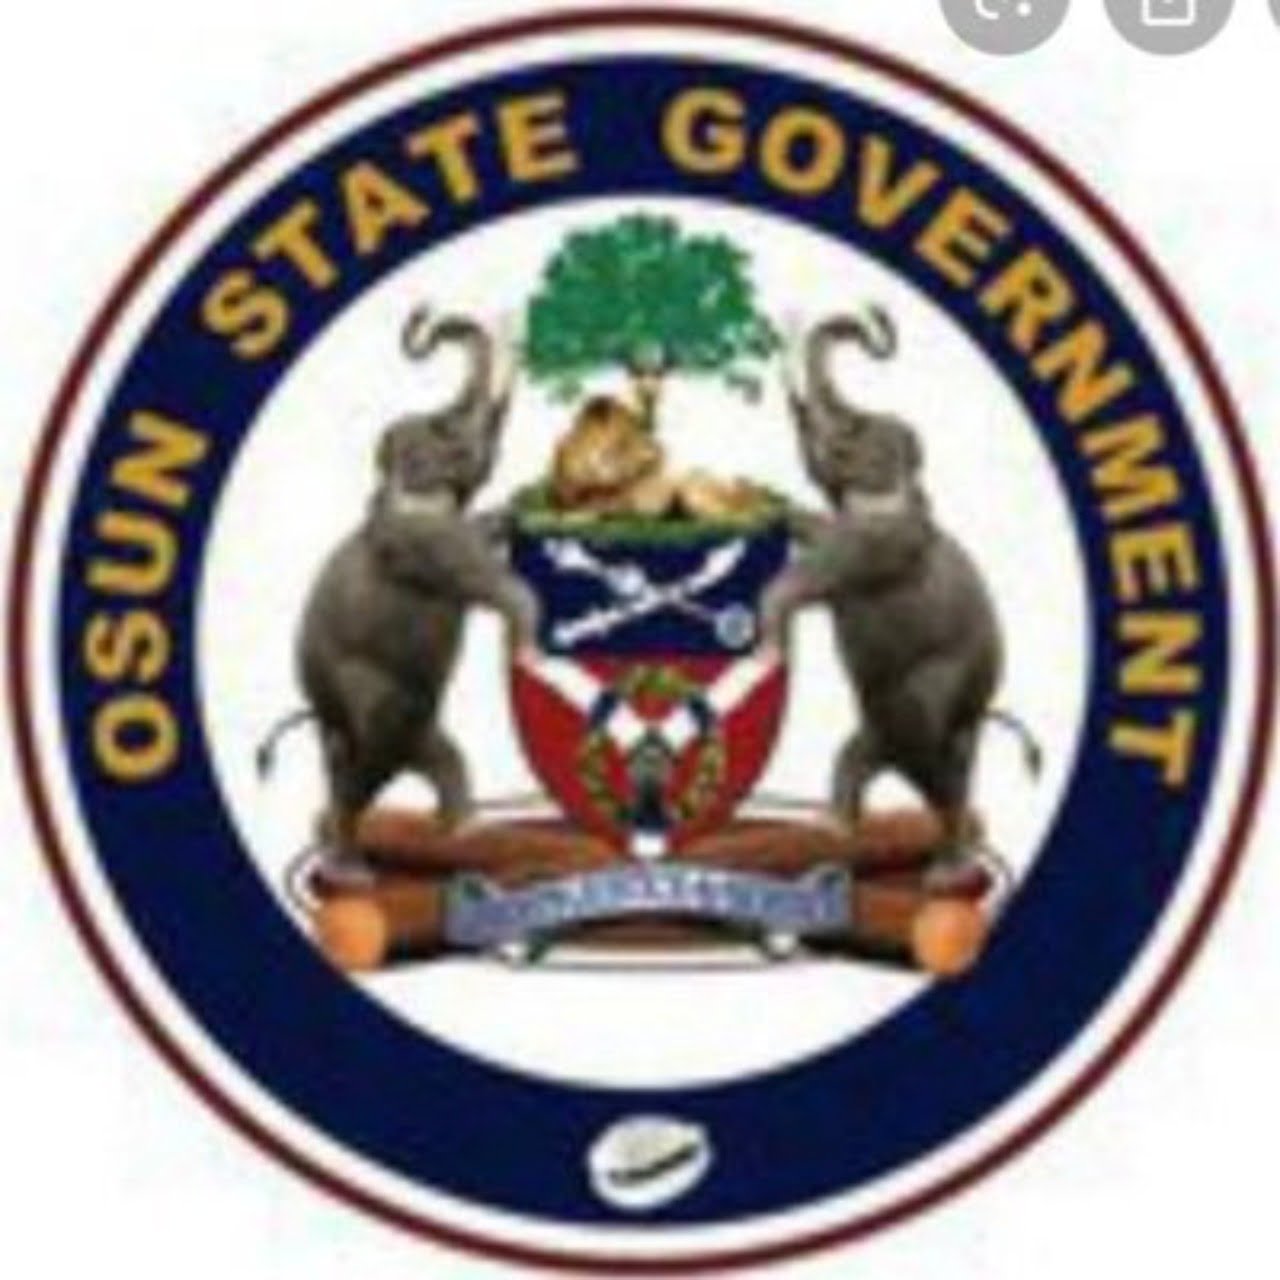 Modakeke/Ife crisis: Osun govt calls for calm